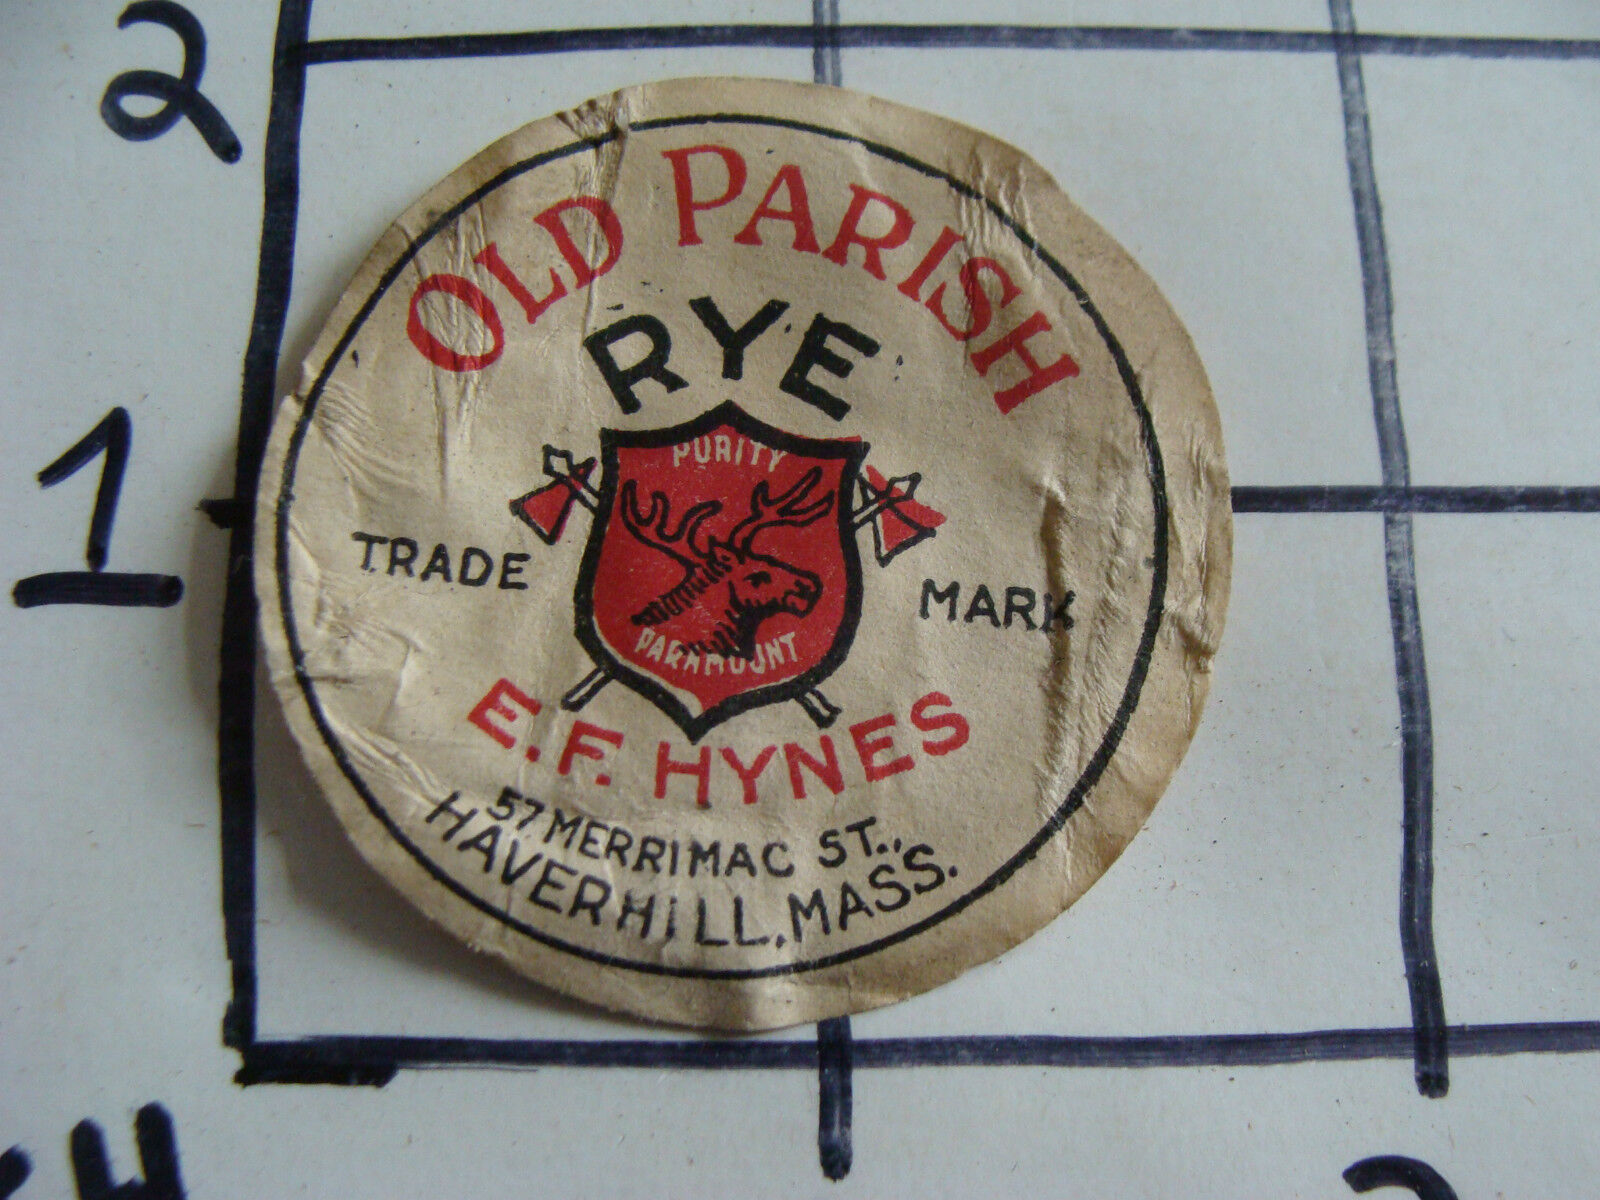 Original Vintage label: OLD PARISH RYE e.f. hynes haverhill, mass